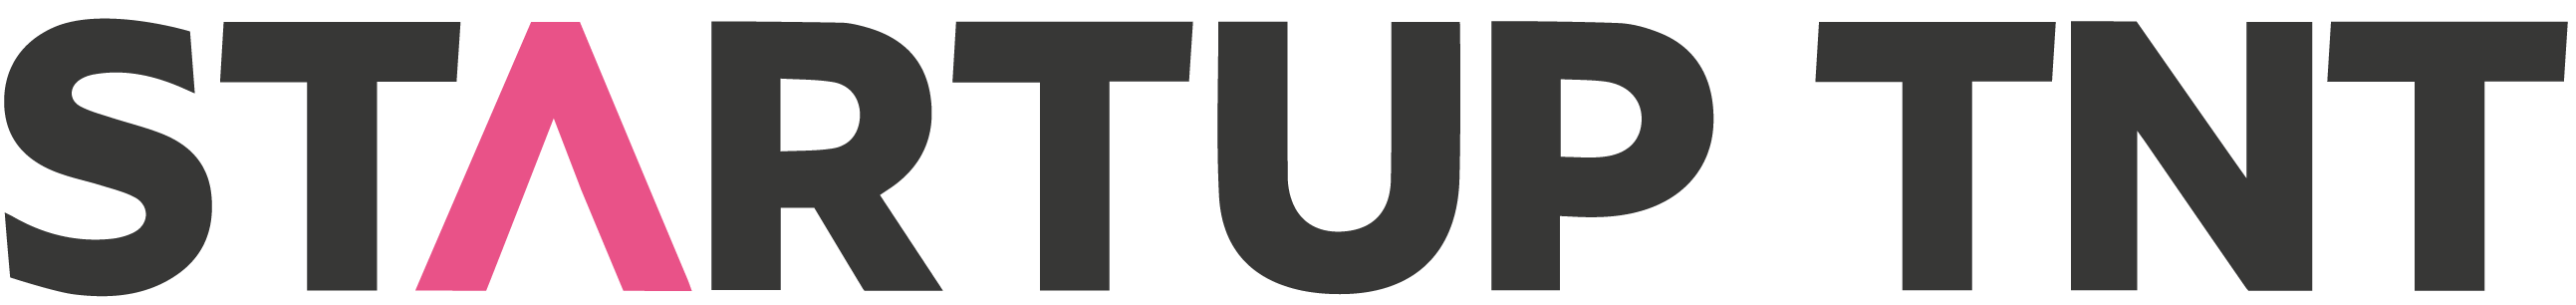 Startup TNT Logo